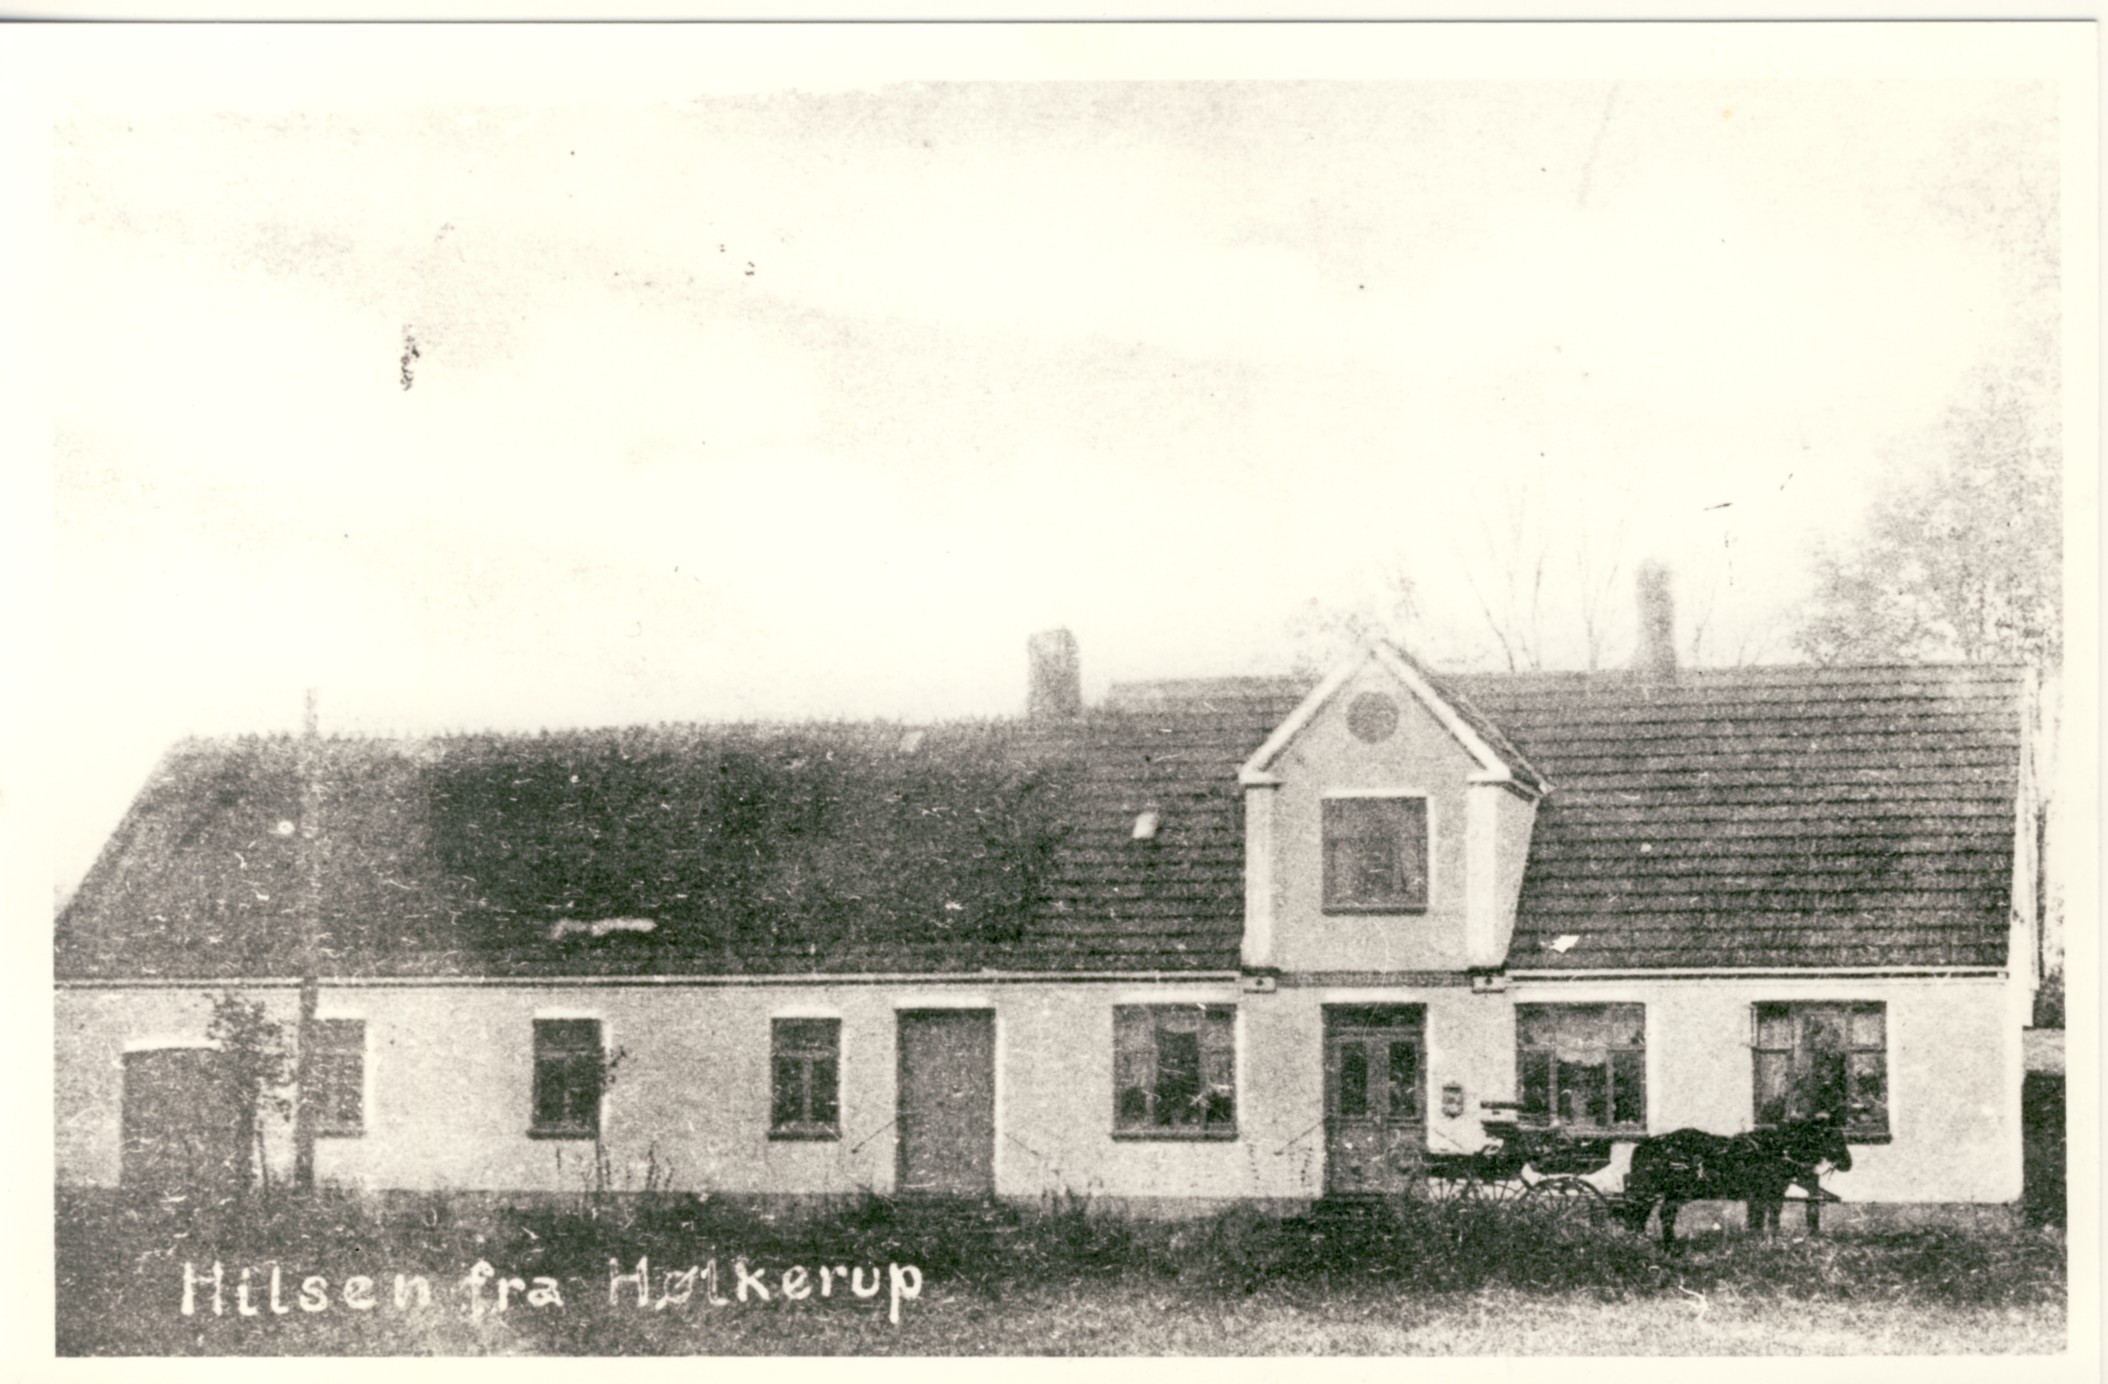 Brådevej 20-22, Hølkerup - ca. 1905 (B4026)